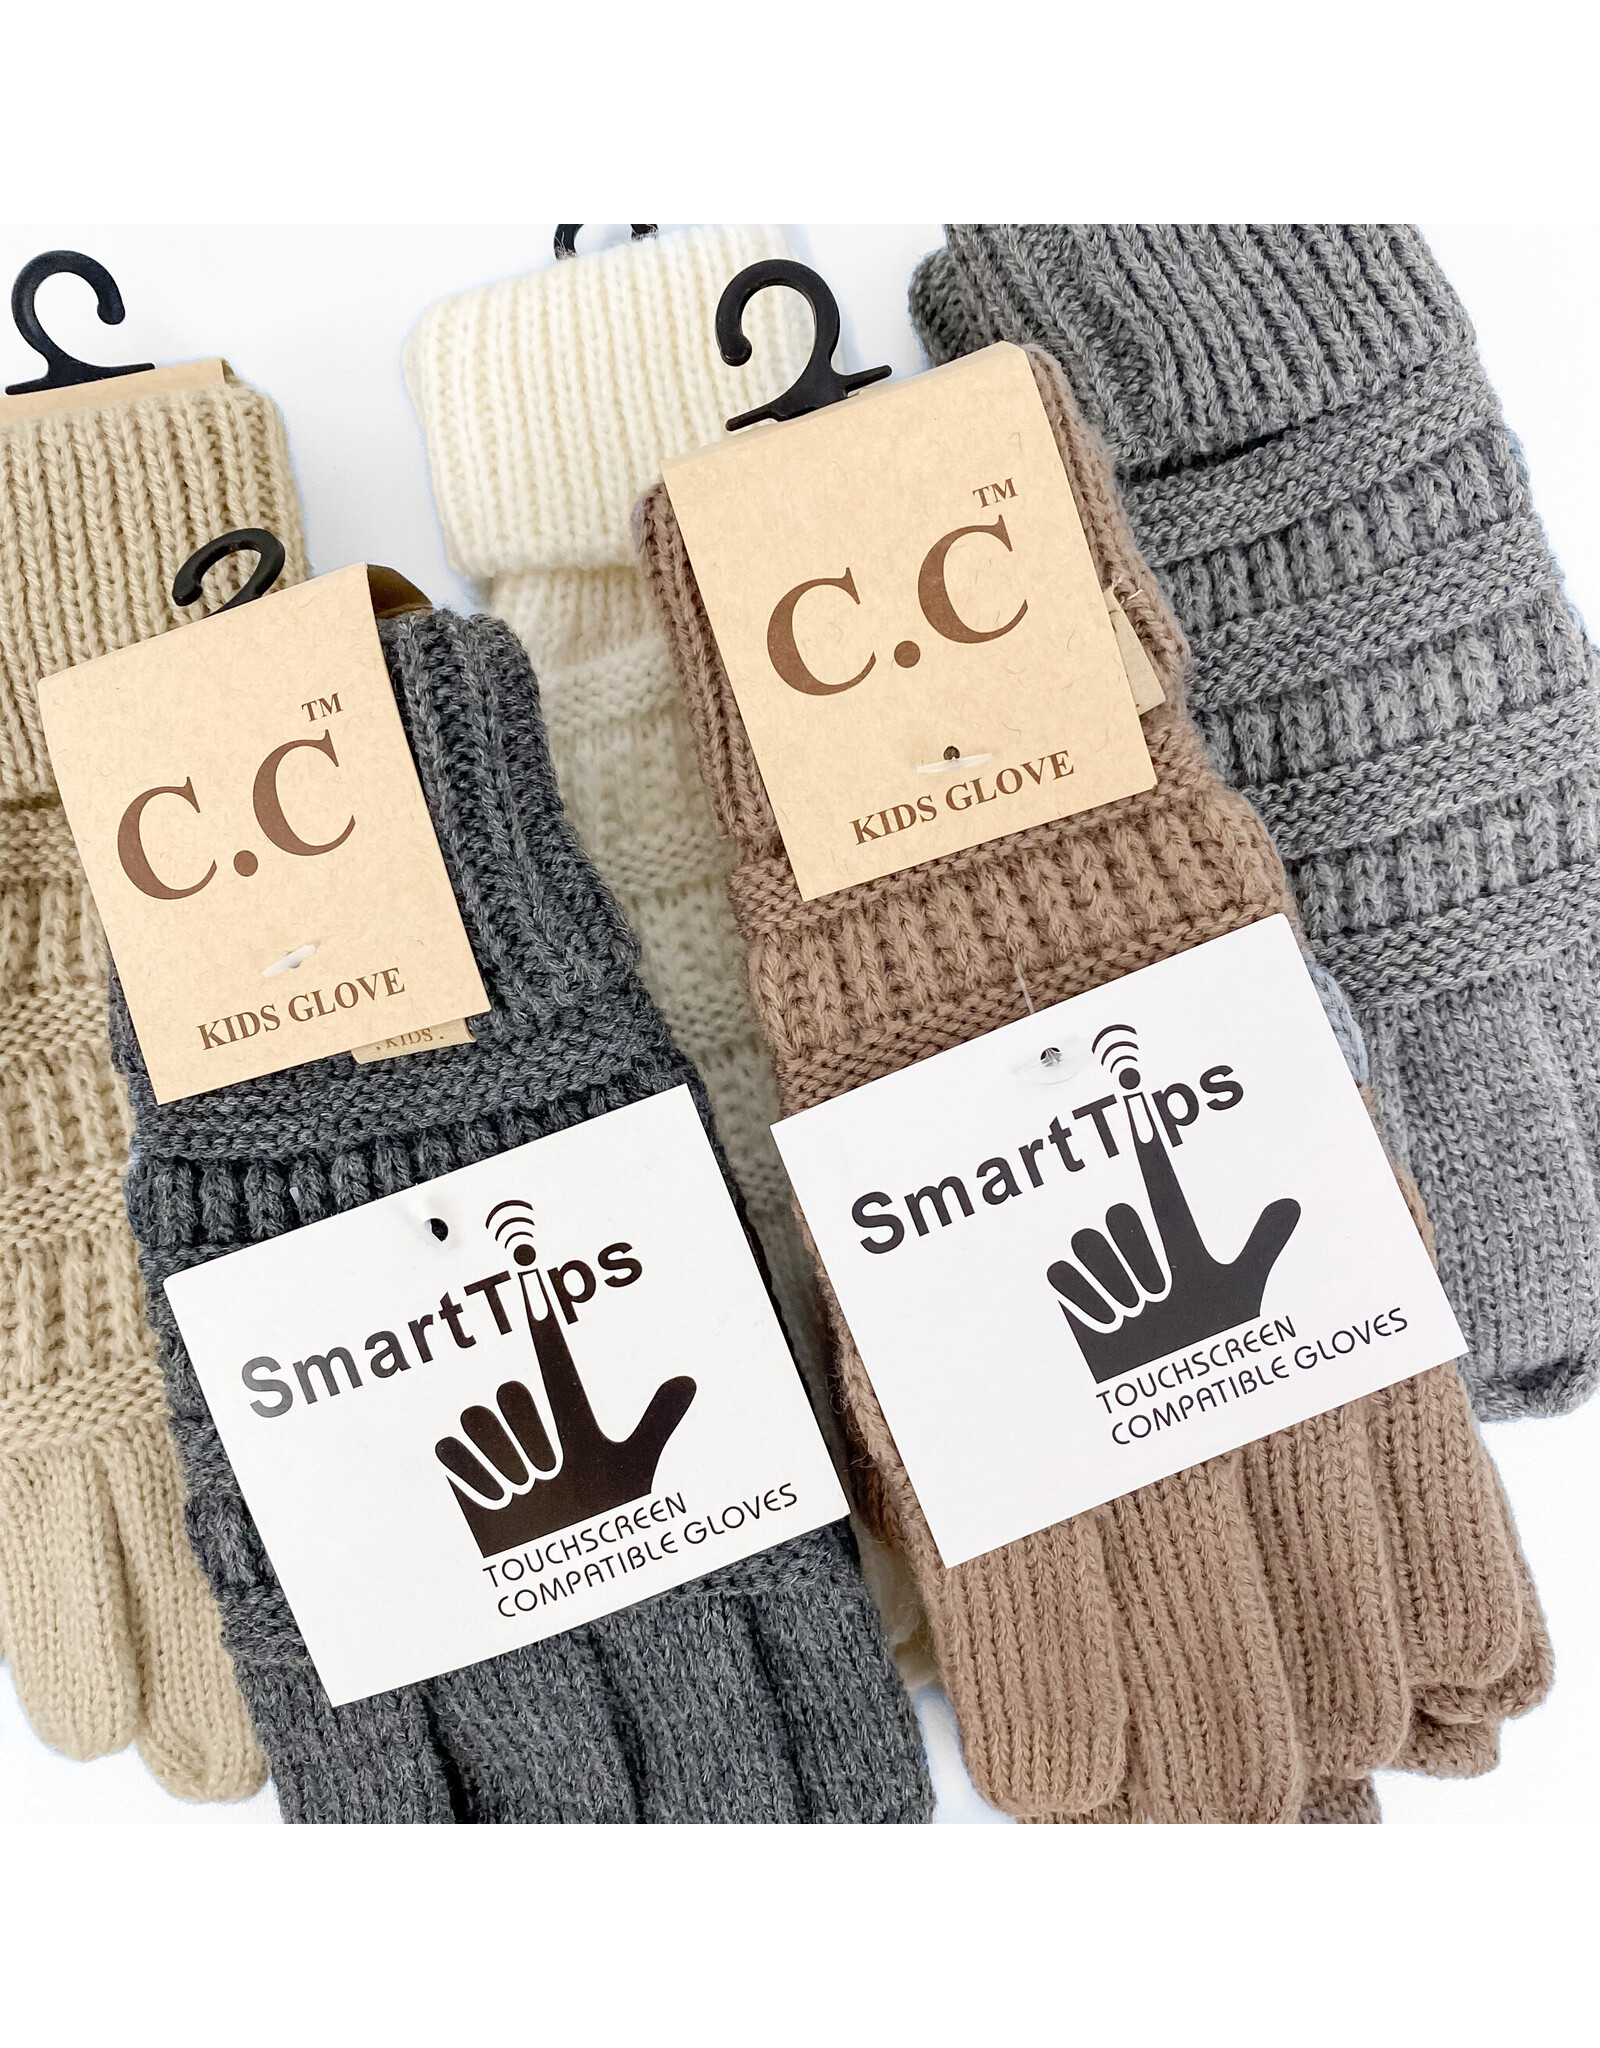 Tween Solid Cable Knit CC Gloves - Dark Grey